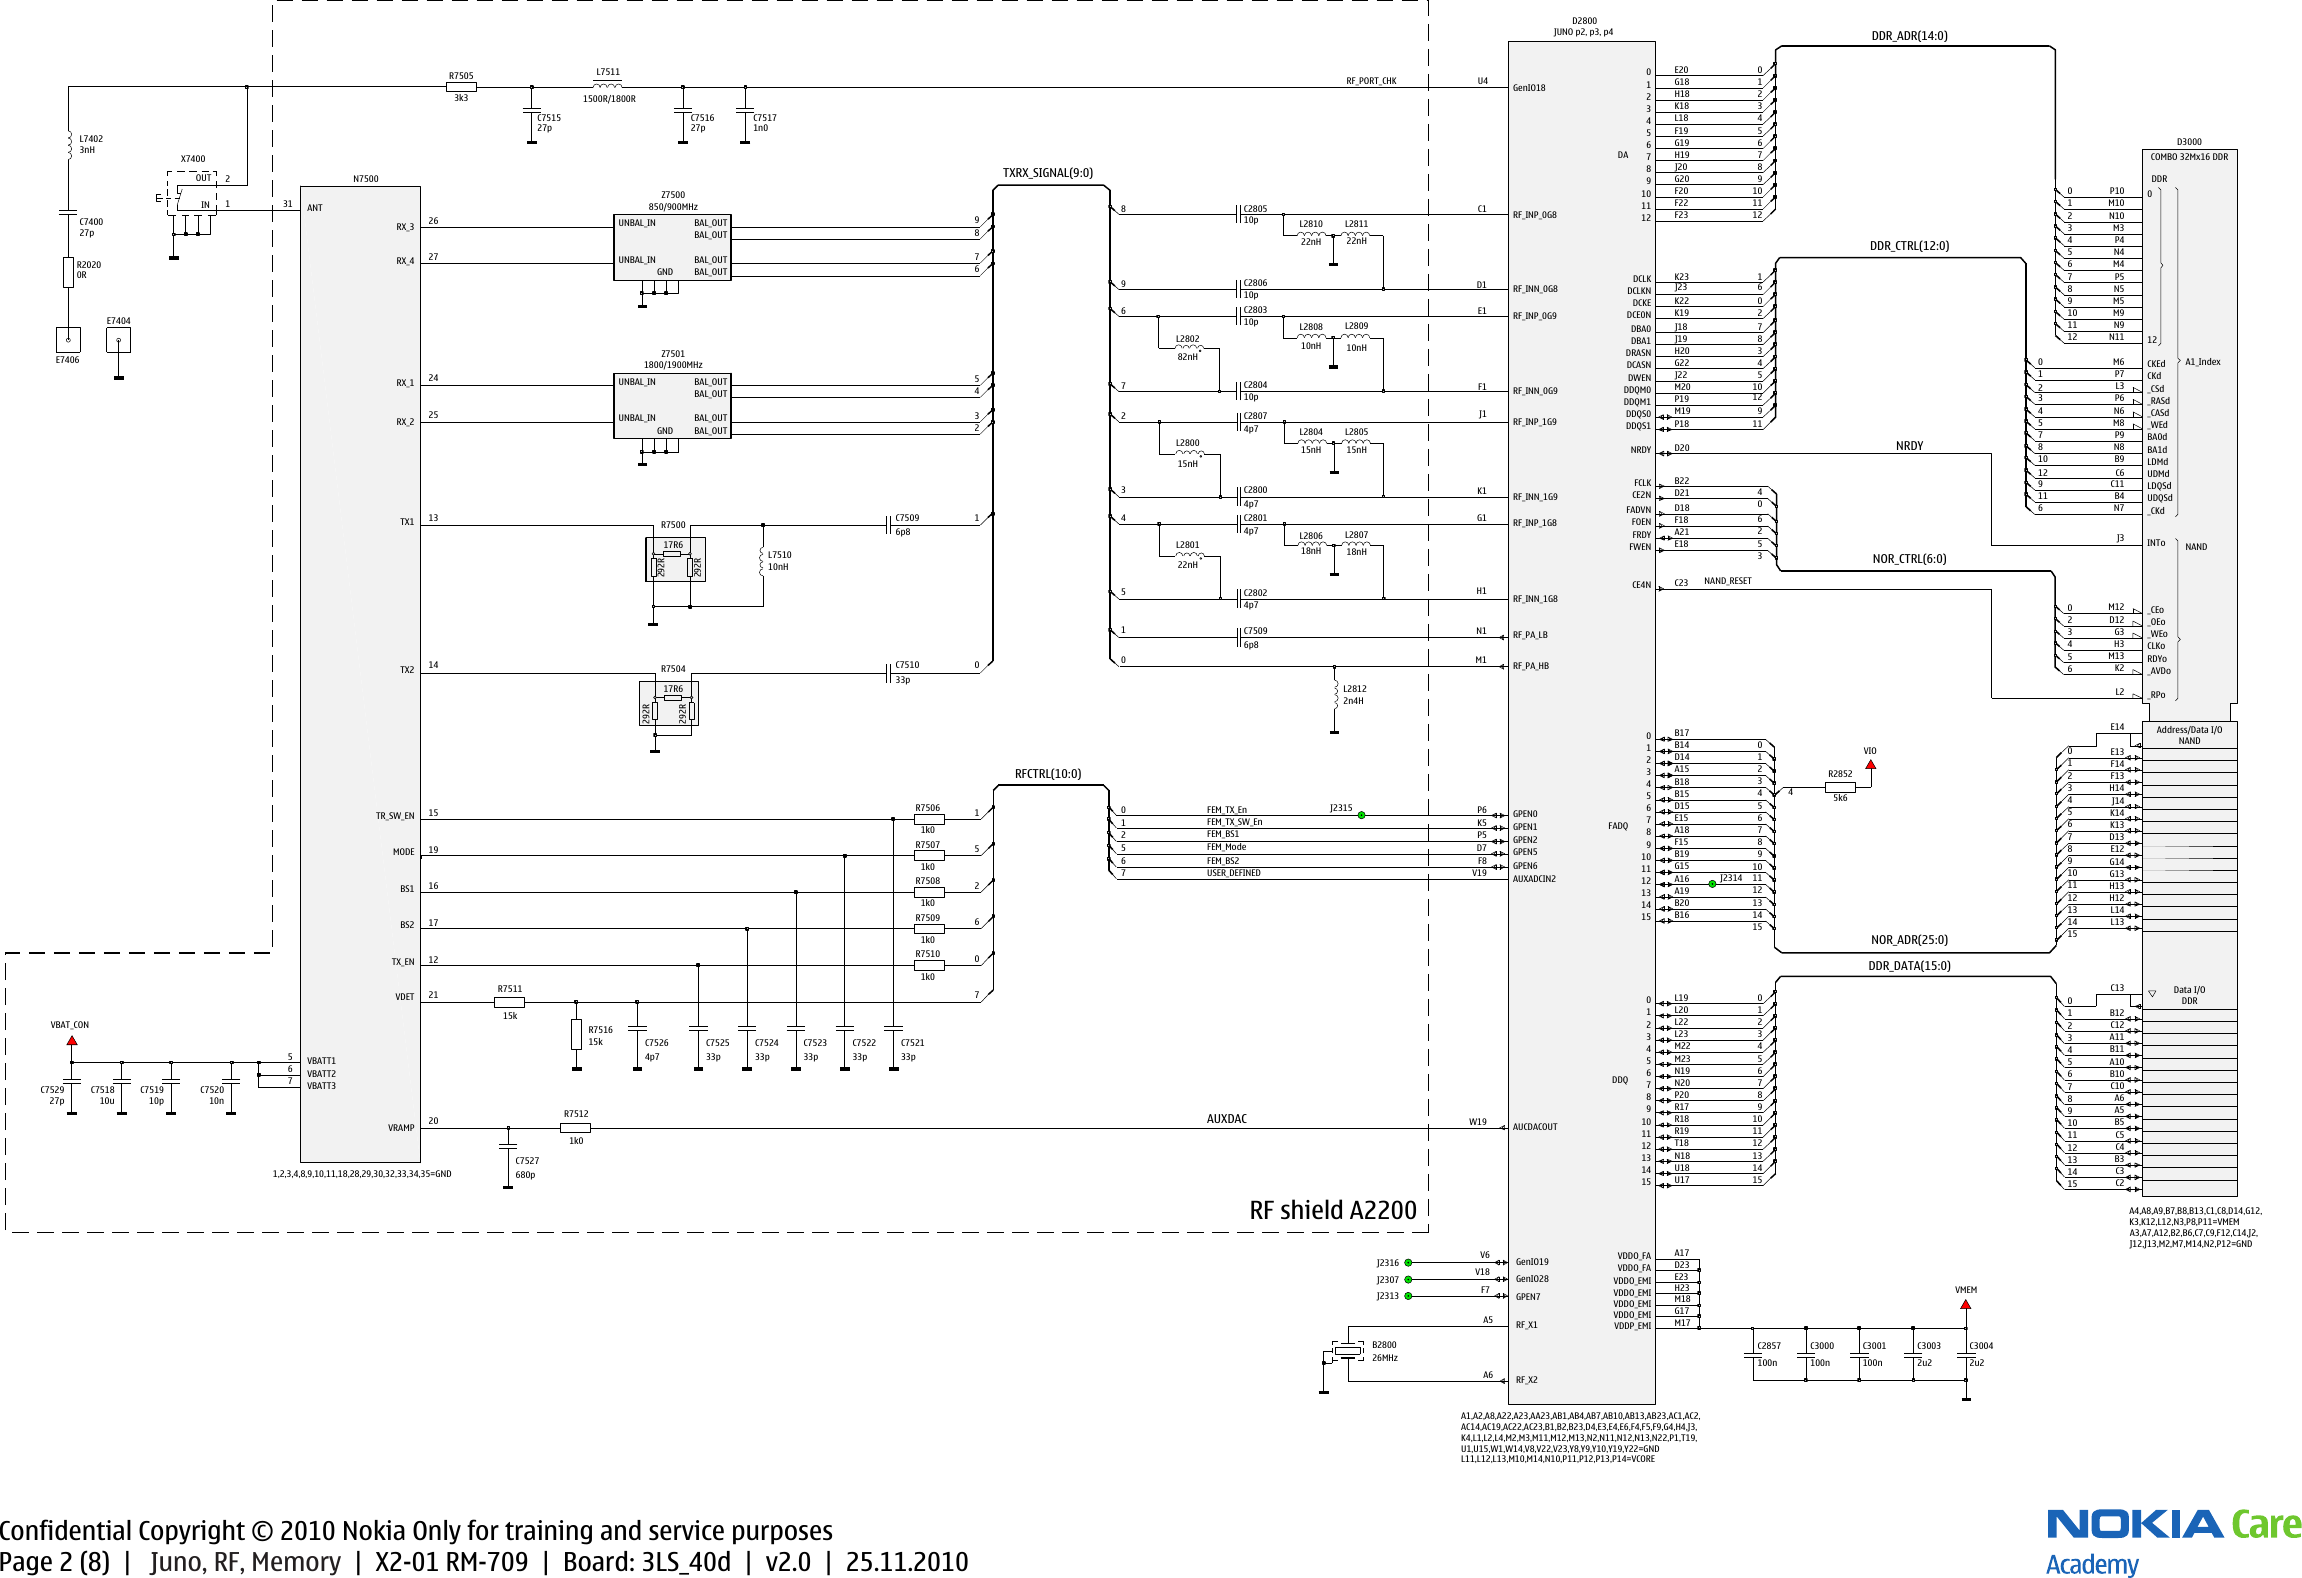 Page 2 of 8 - Nokia X2-01 RM709 Service Schematics Rm-709 V2